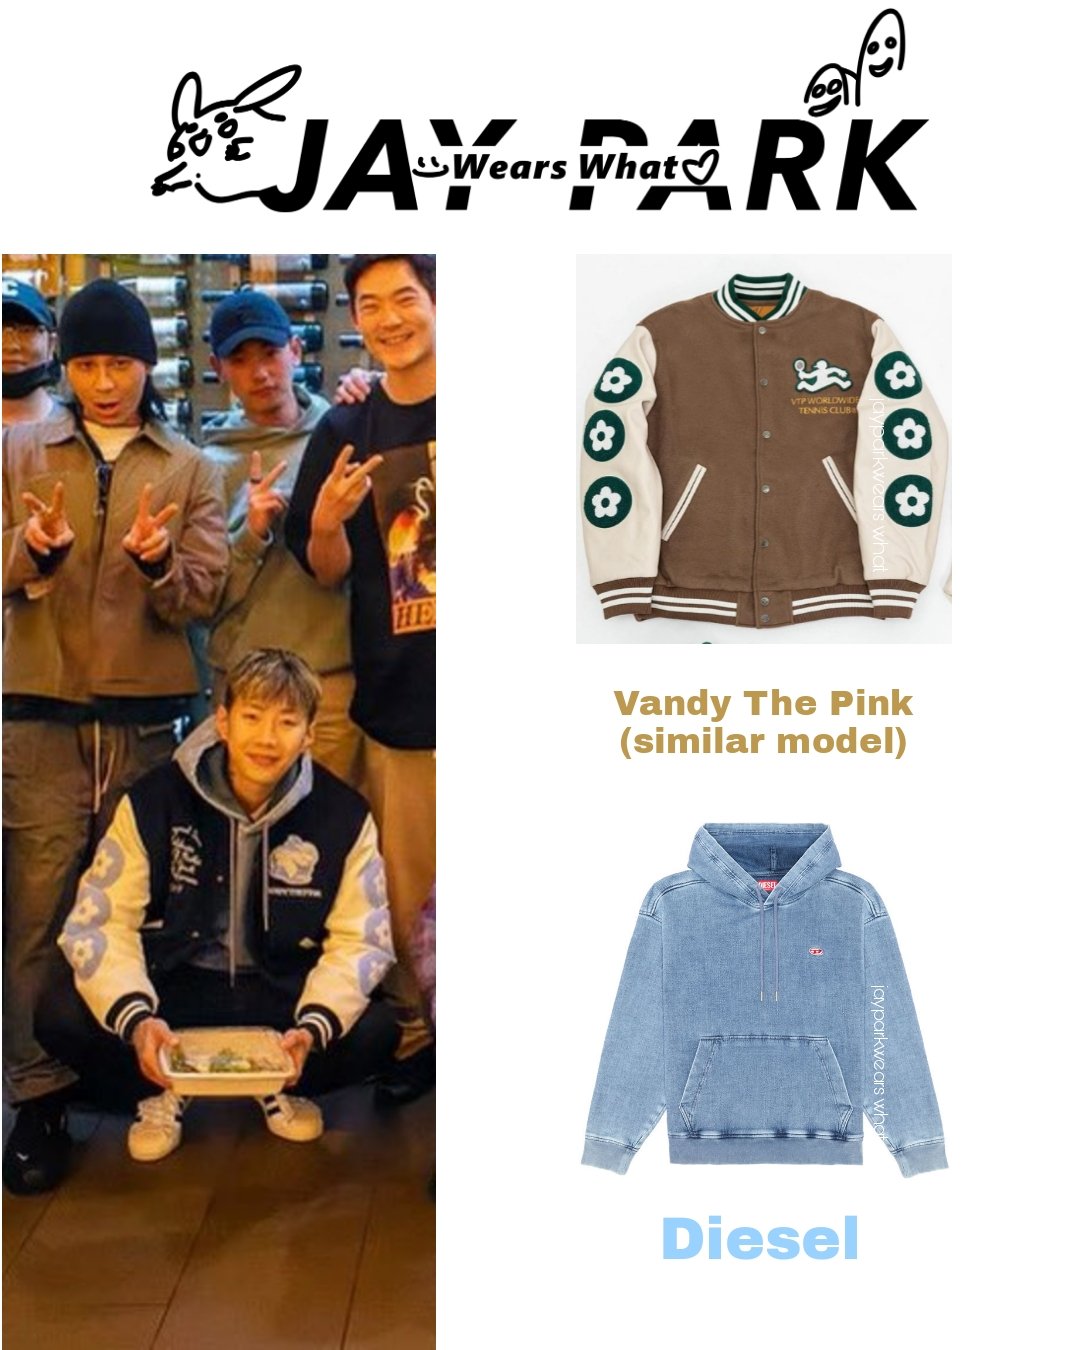 mafreshman0425 on X: ⭐:Vandy The Pink/ Diesel 💰:unknown/$350  #jayparkwearswhat #jaypark #박재범  / X